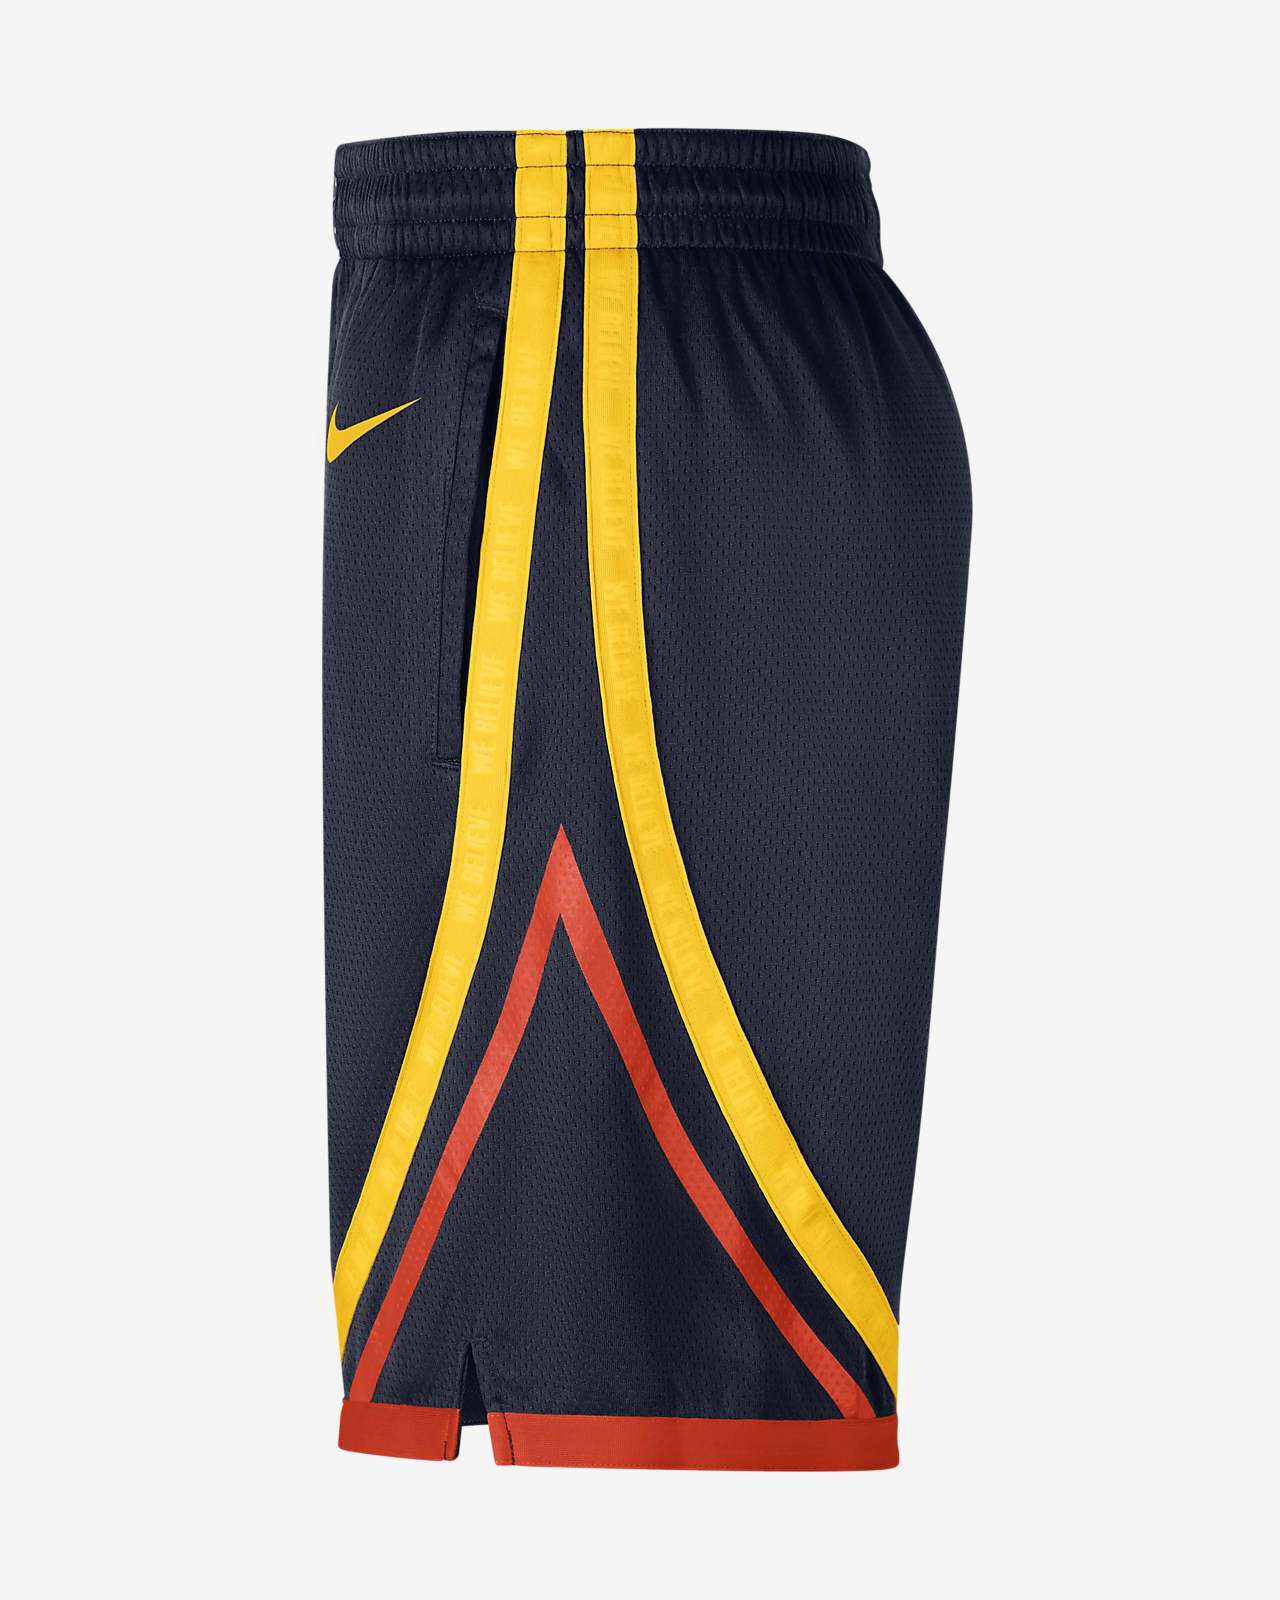 Retro Golden State Warriors Basketball Shorts Stitched Lightning Edition 